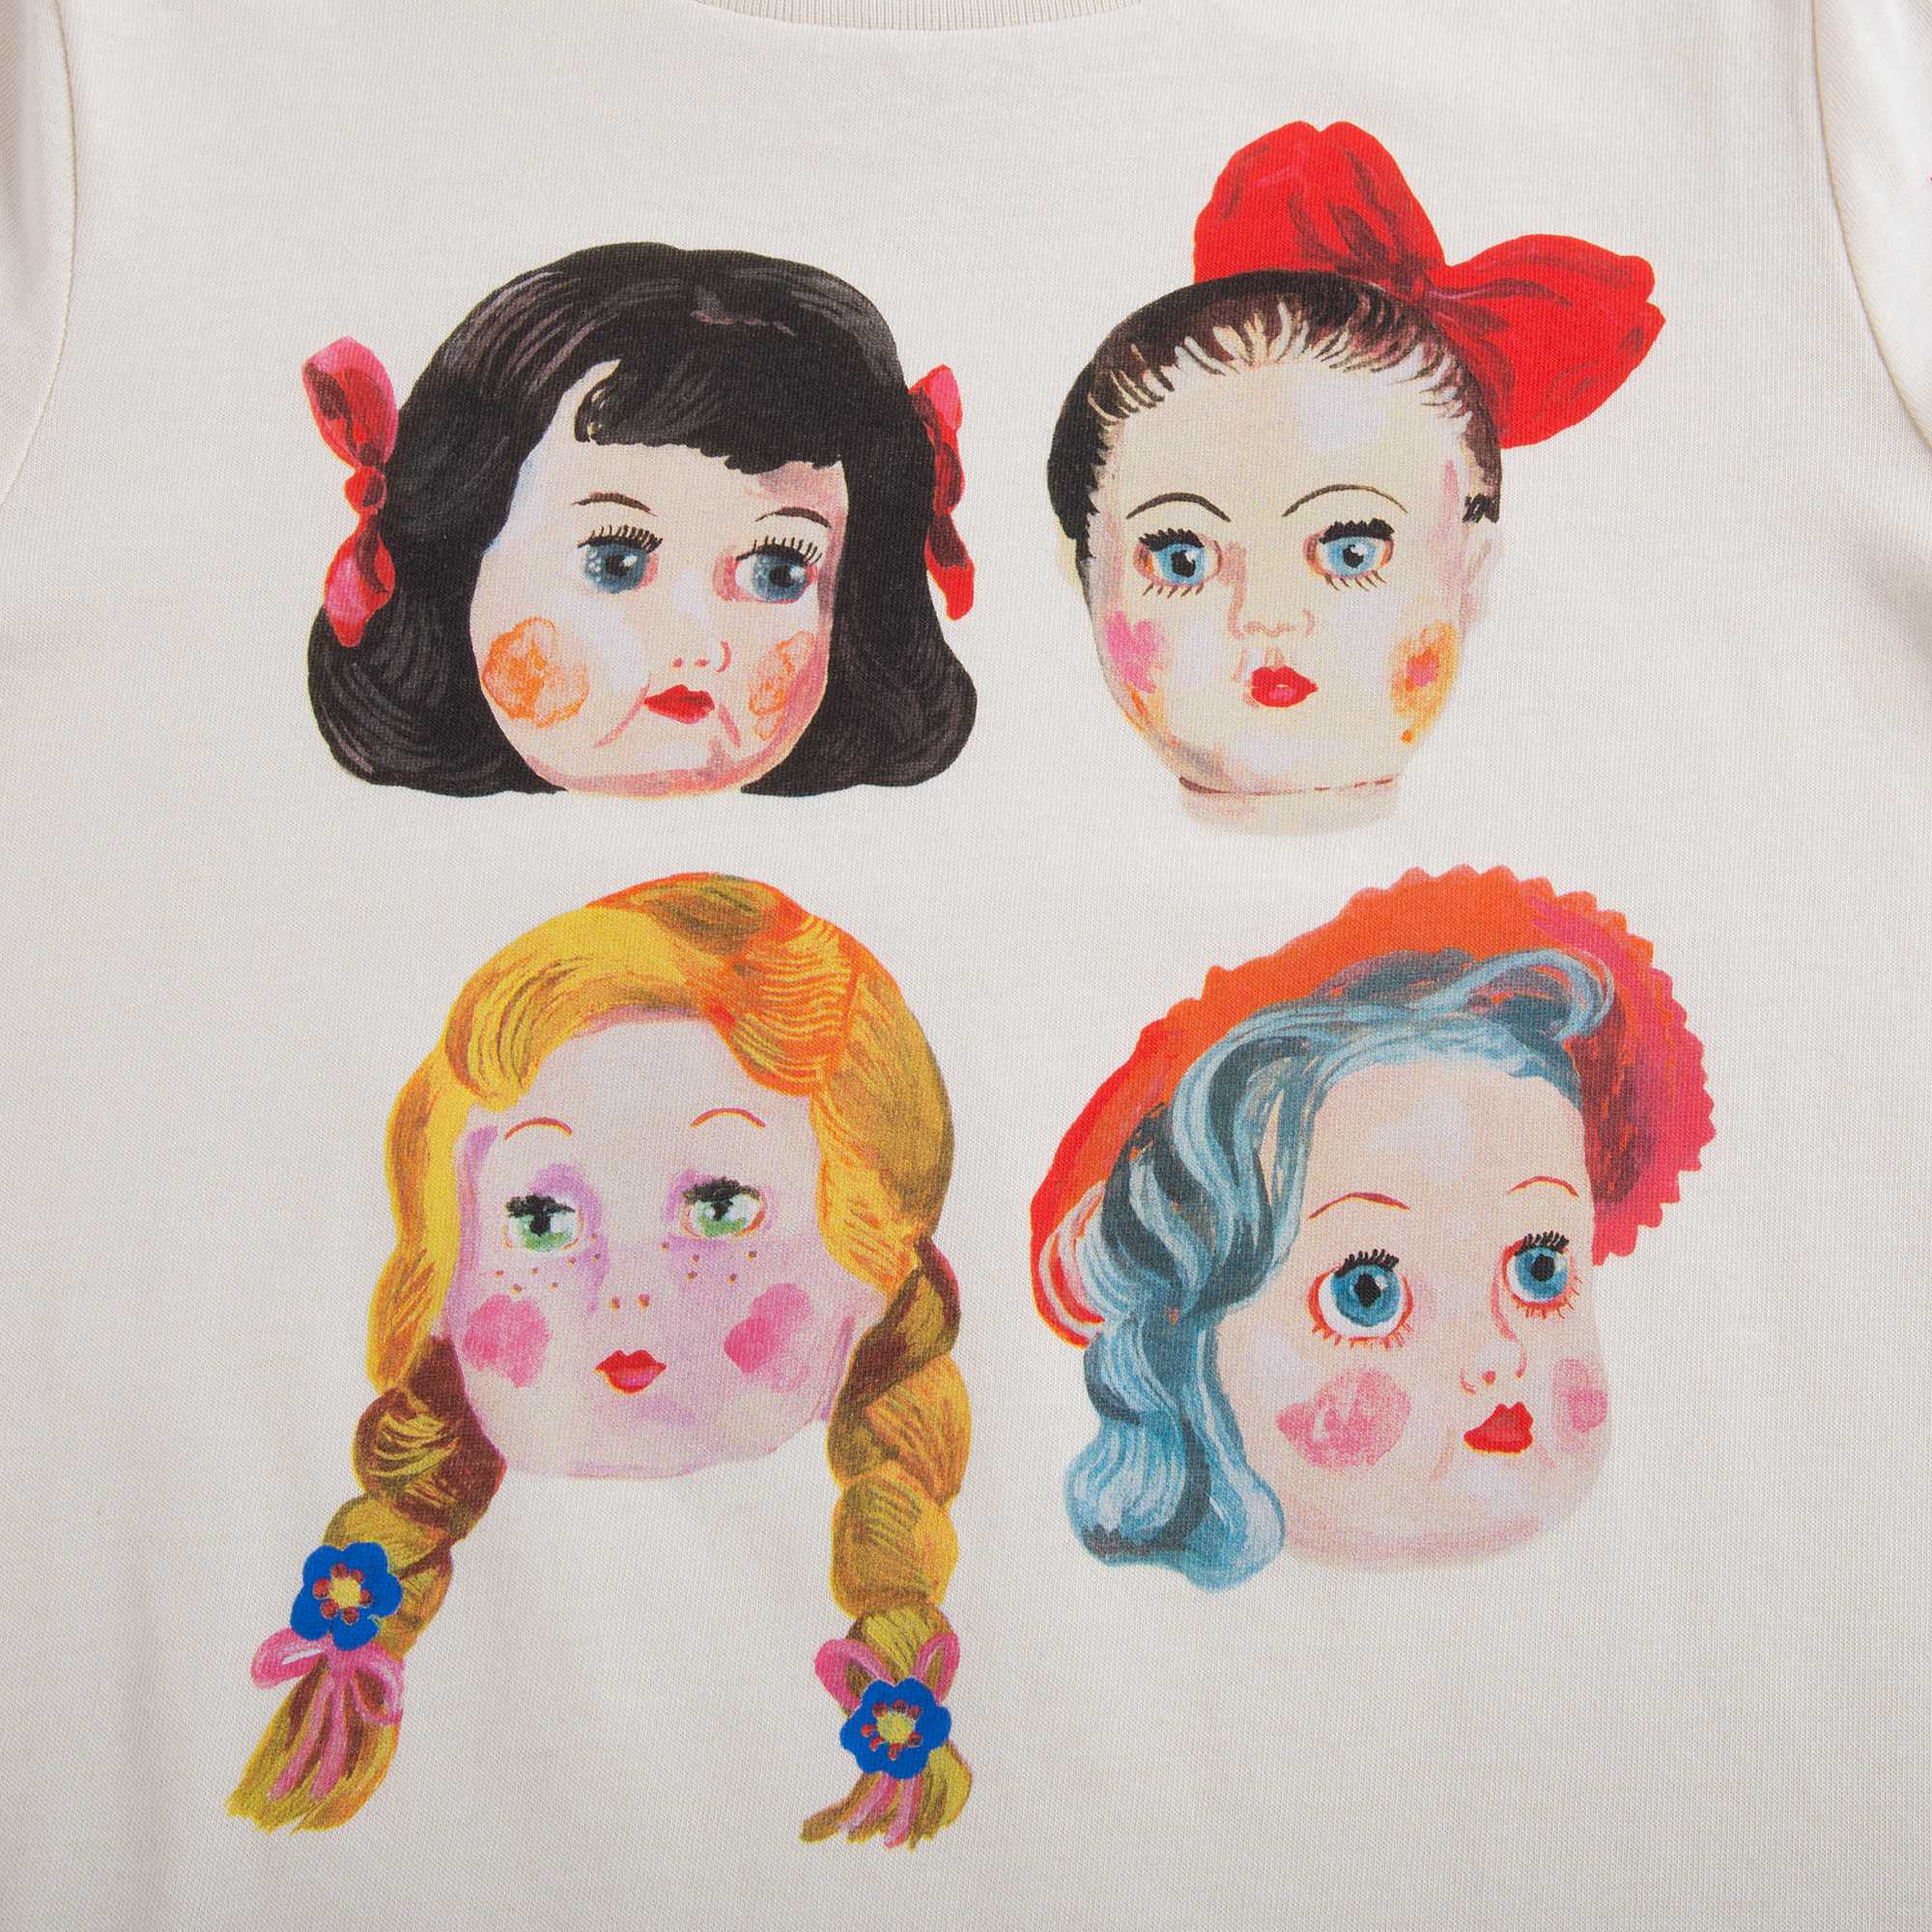 Girls Beige Printed Cotton T-shirt